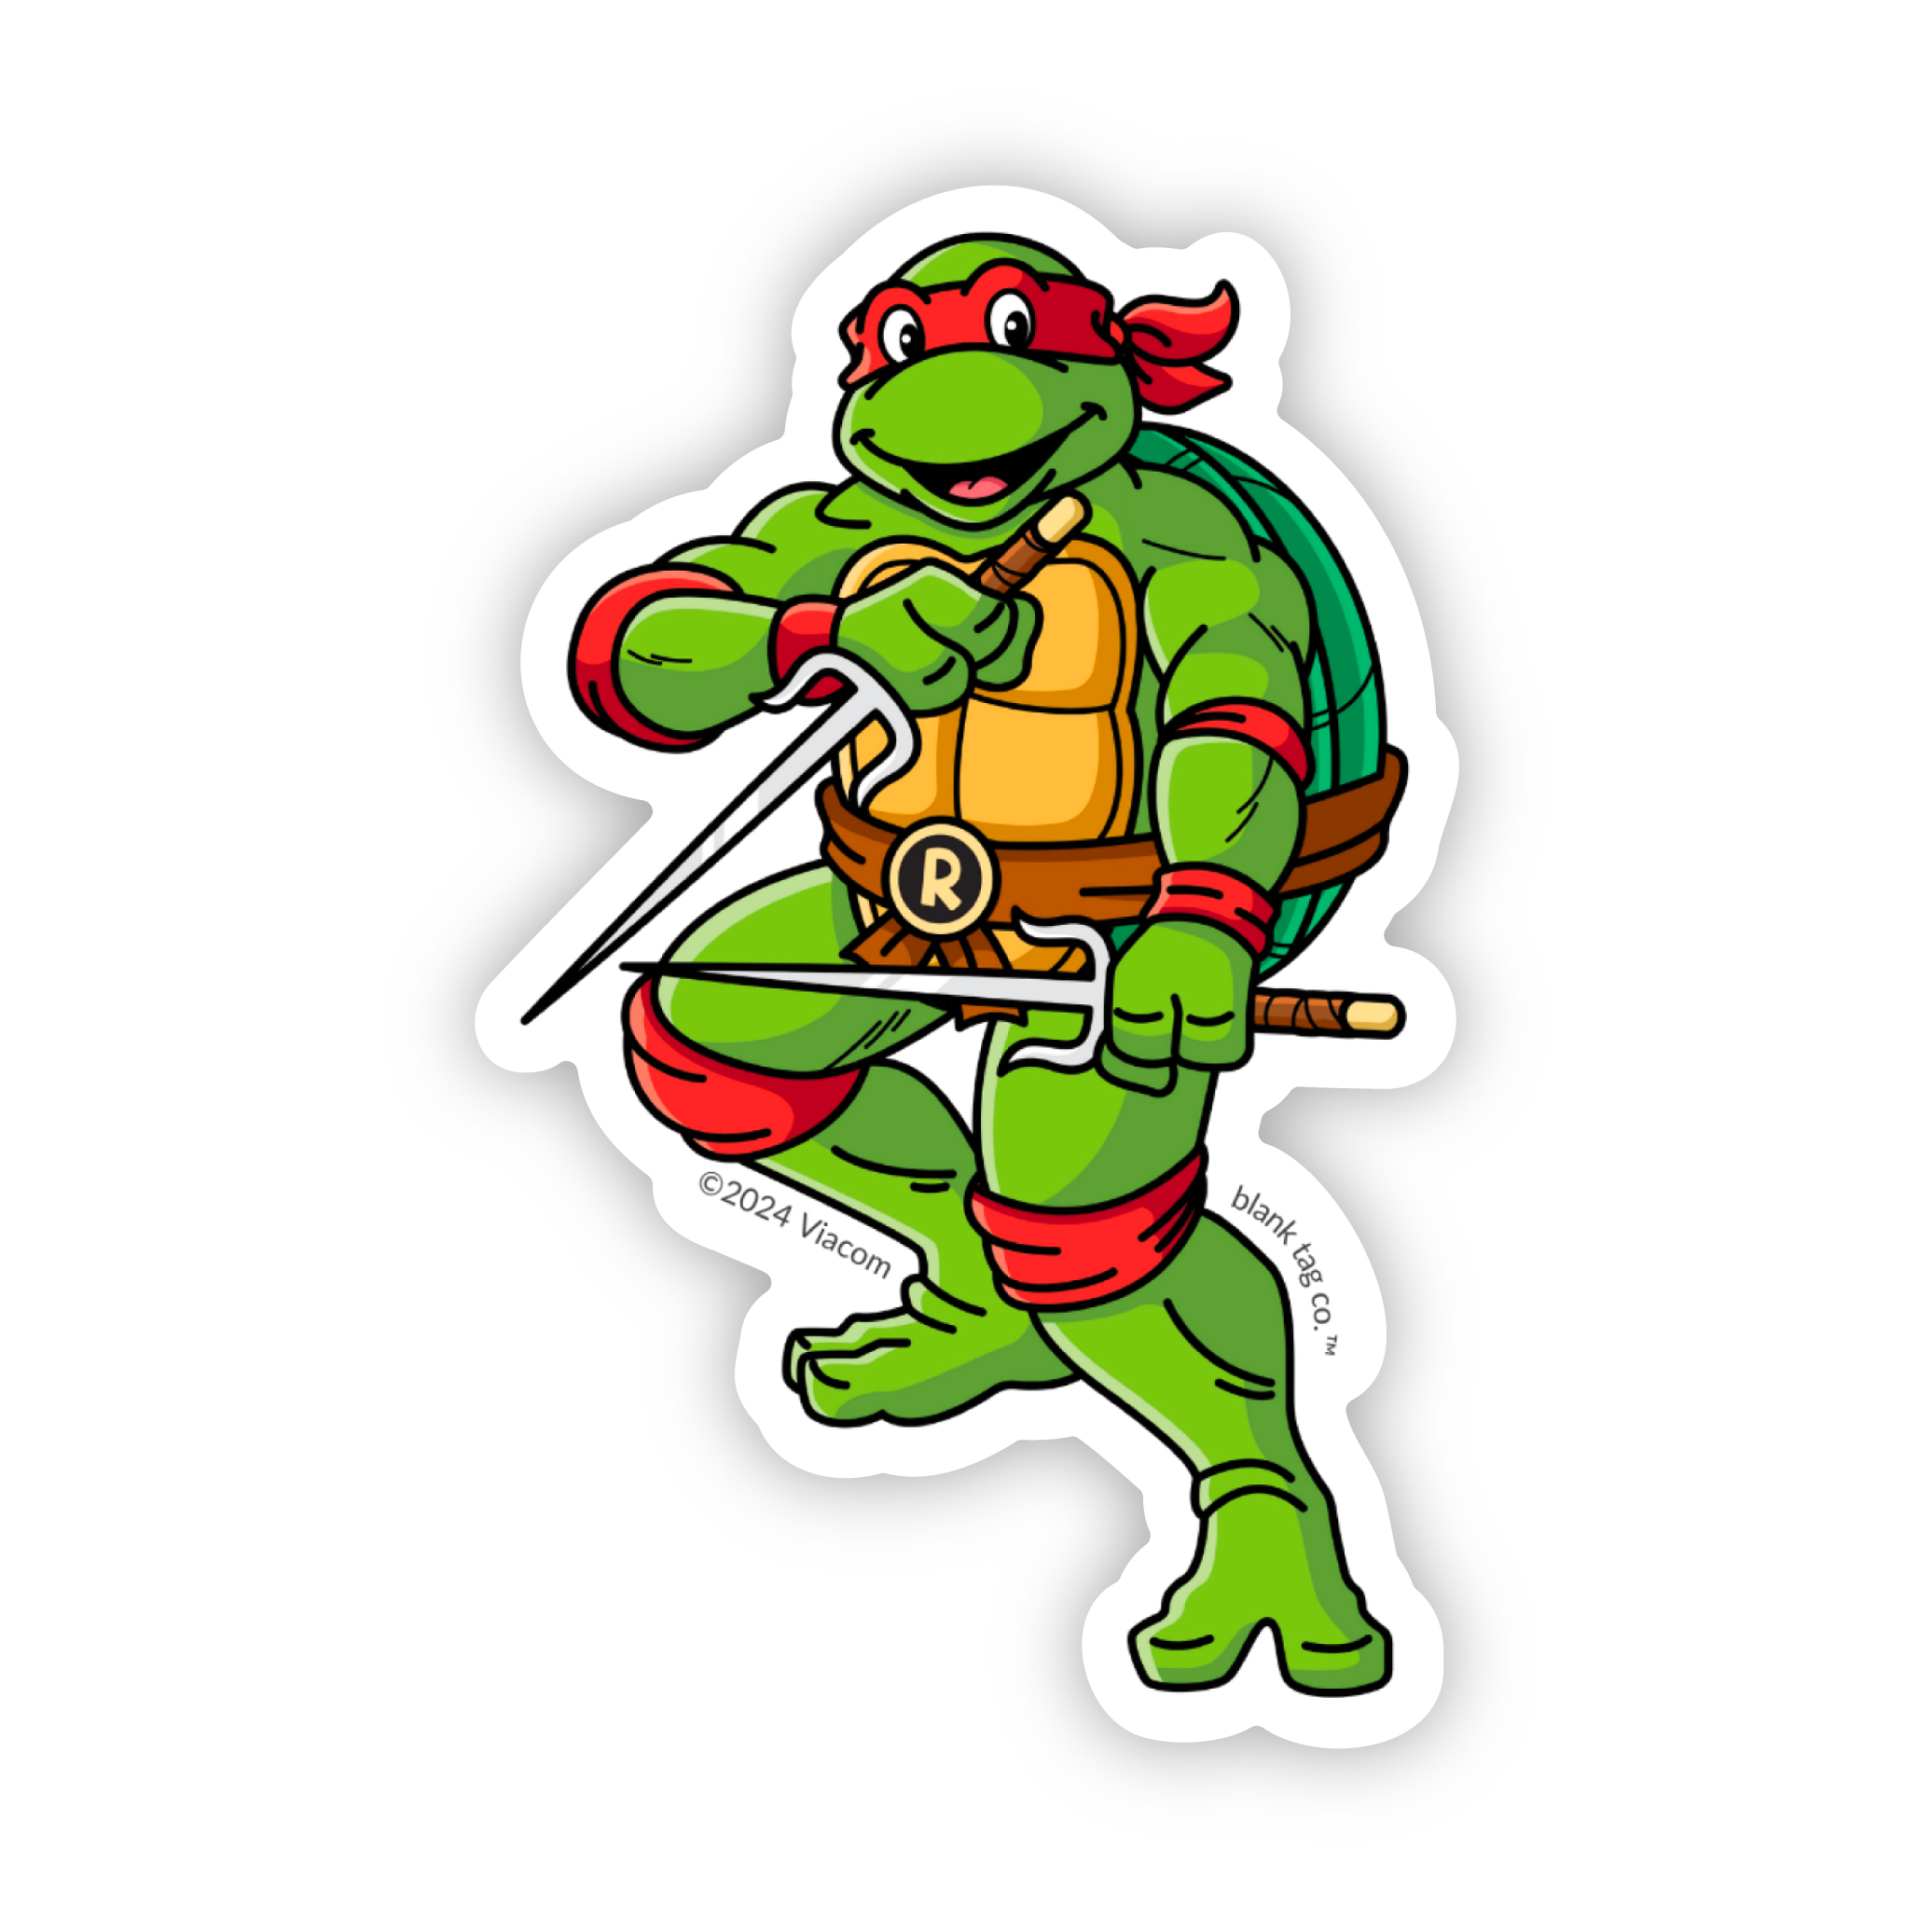 The Raphael Sticker